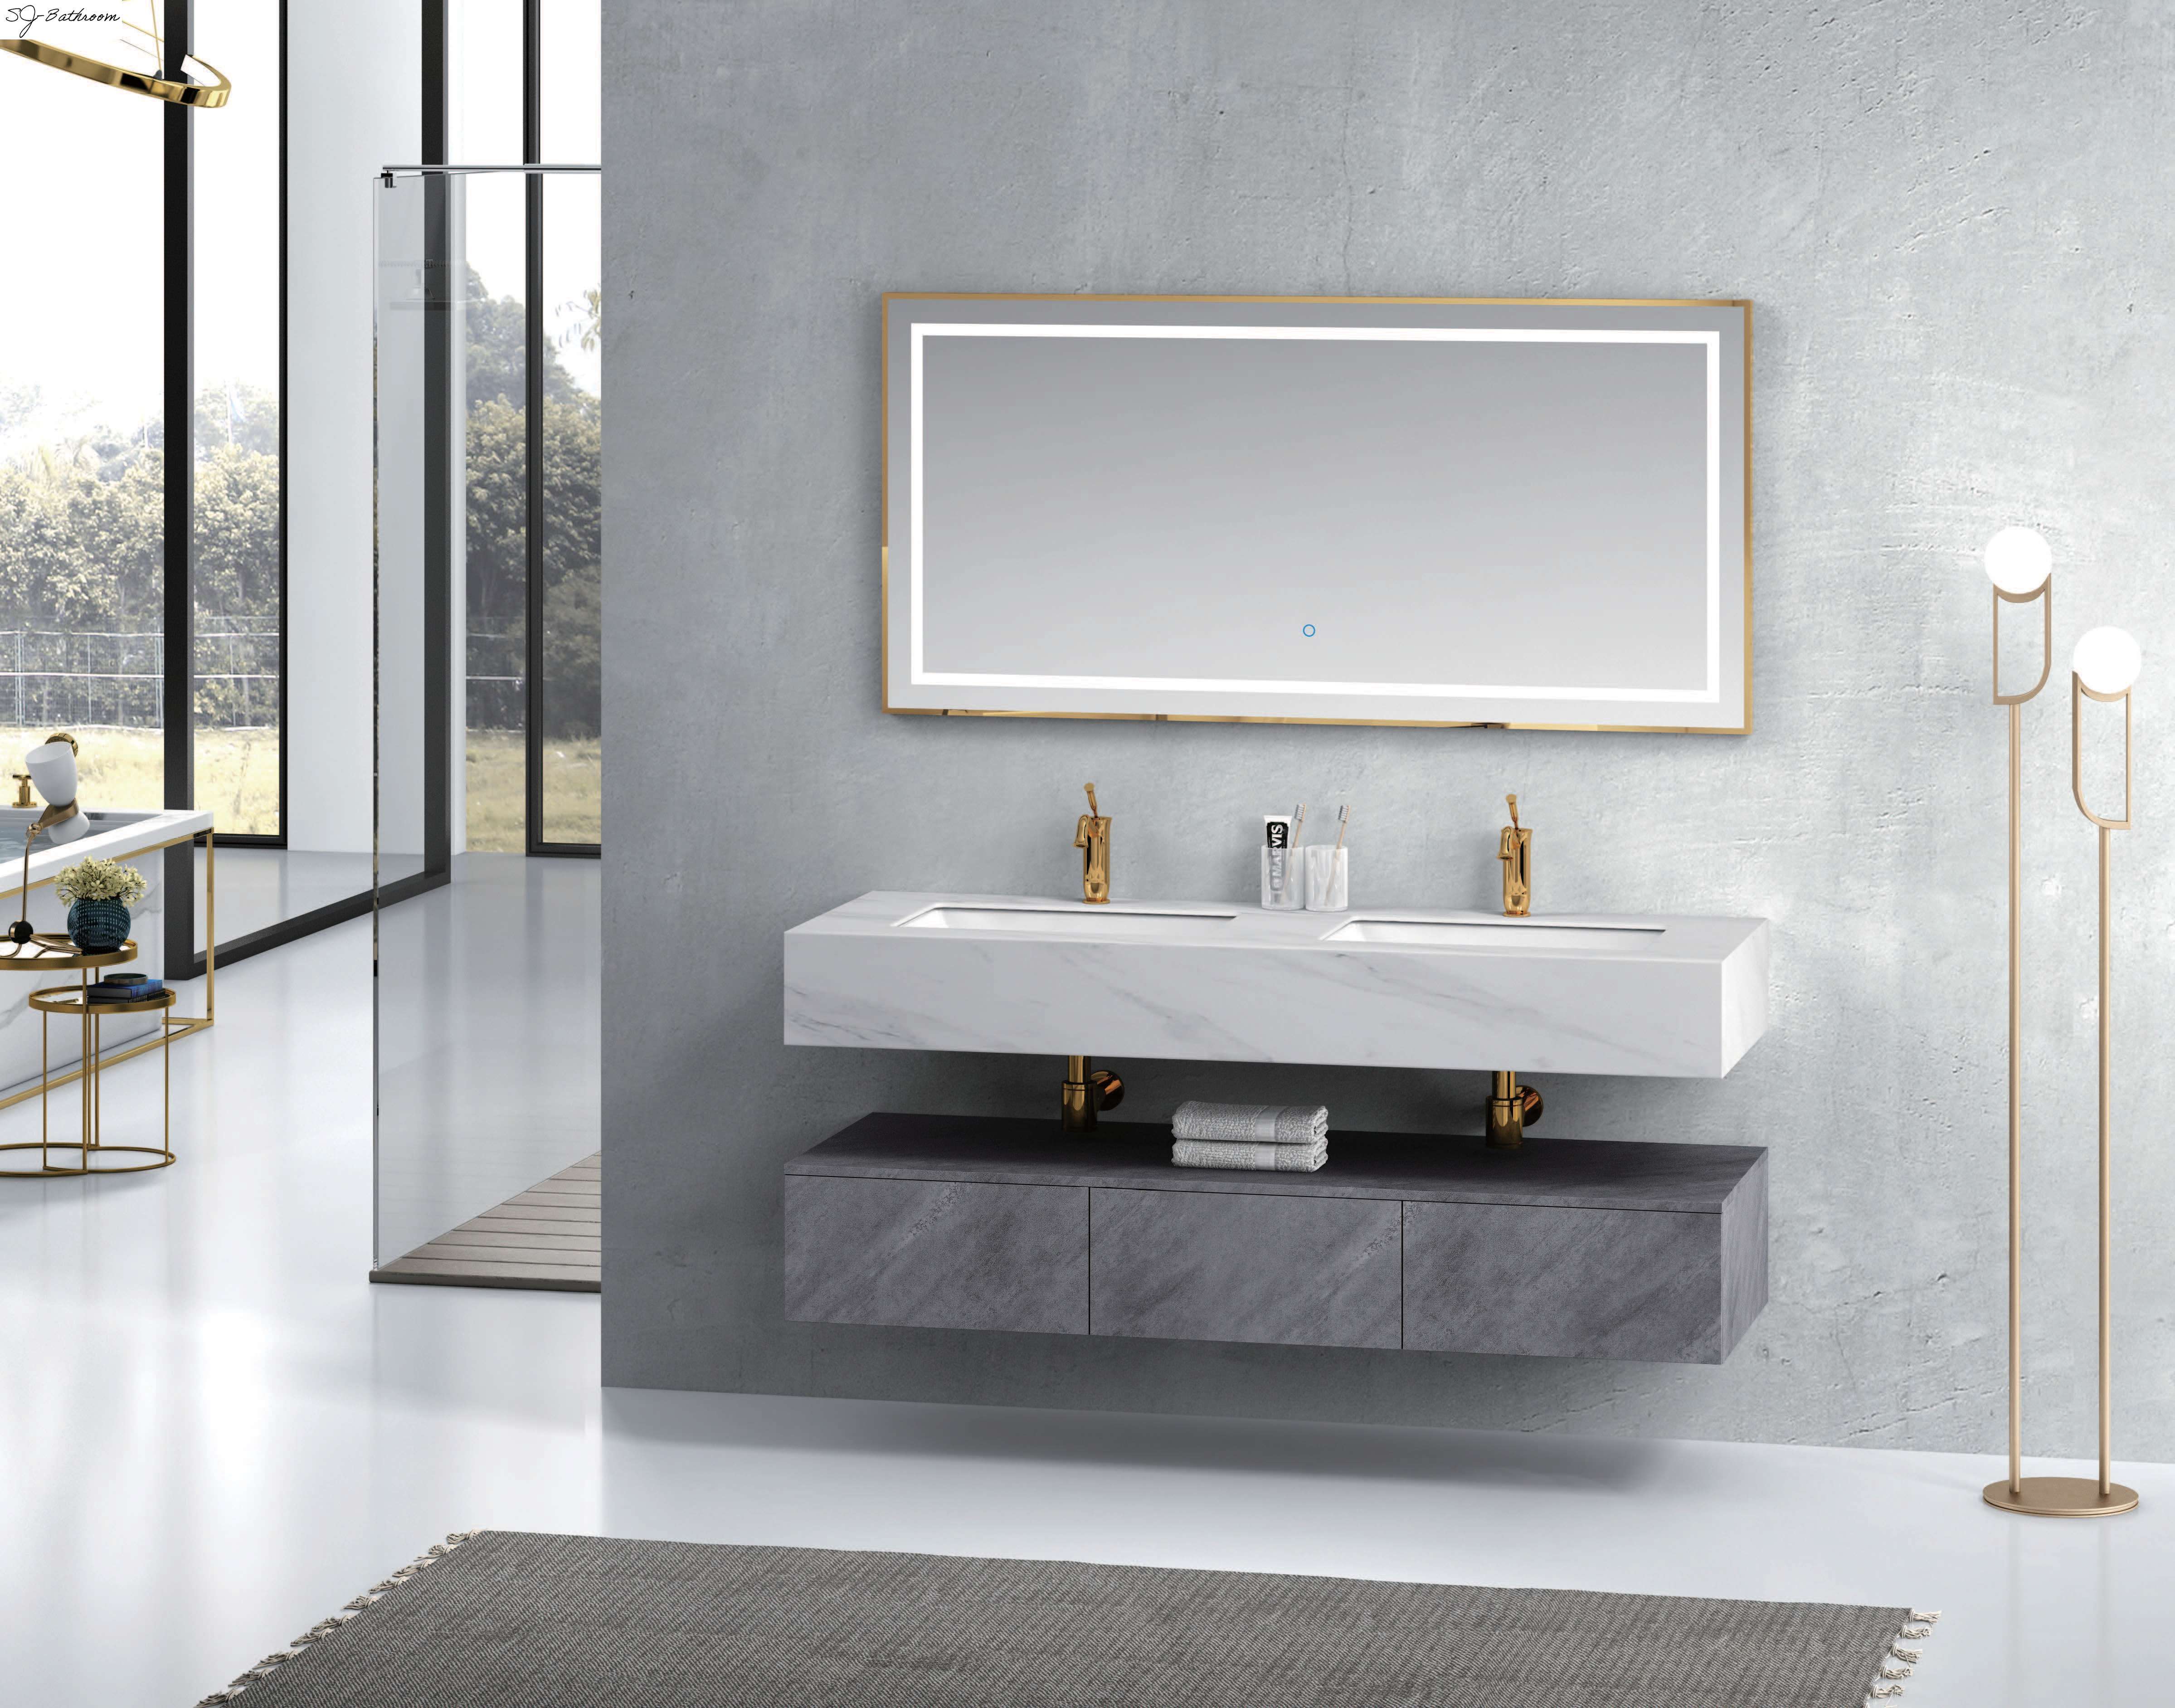 New double basin modern bathroom cabinet furniture SJ-2044